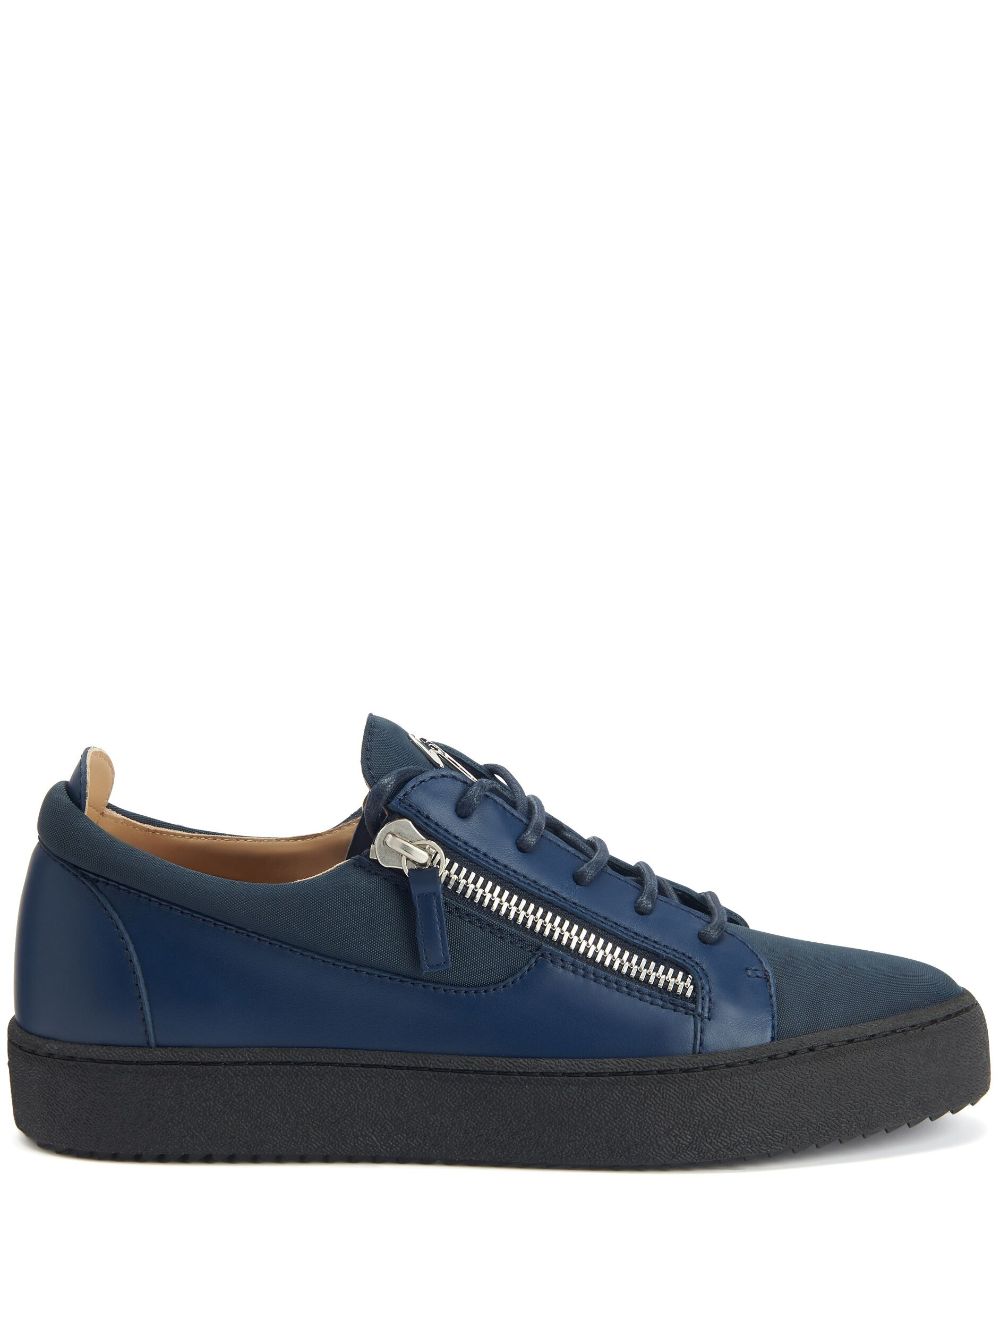 Giuseppe Zanotti Frankie leather sneakers - Blue von Giuseppe Zanotti